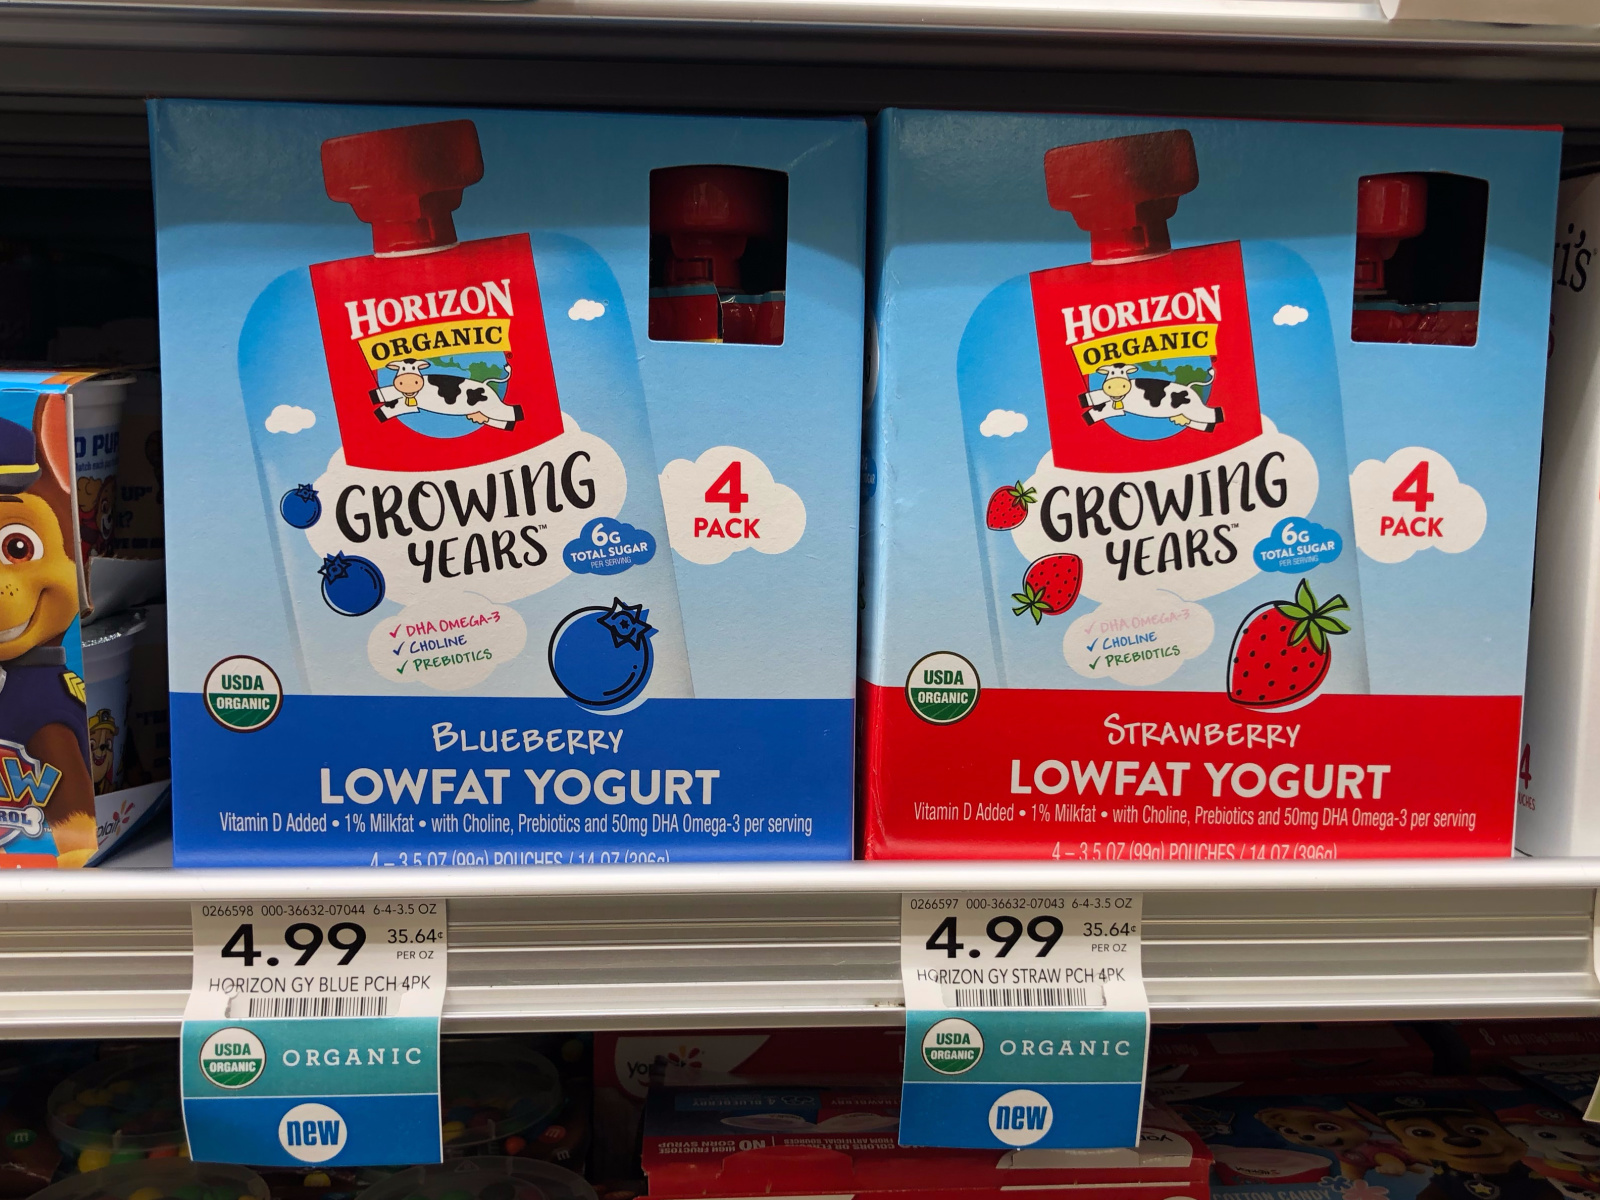 Save $2 On Horizon Growing Years Yogurt At Publix on I Heart Publix 1